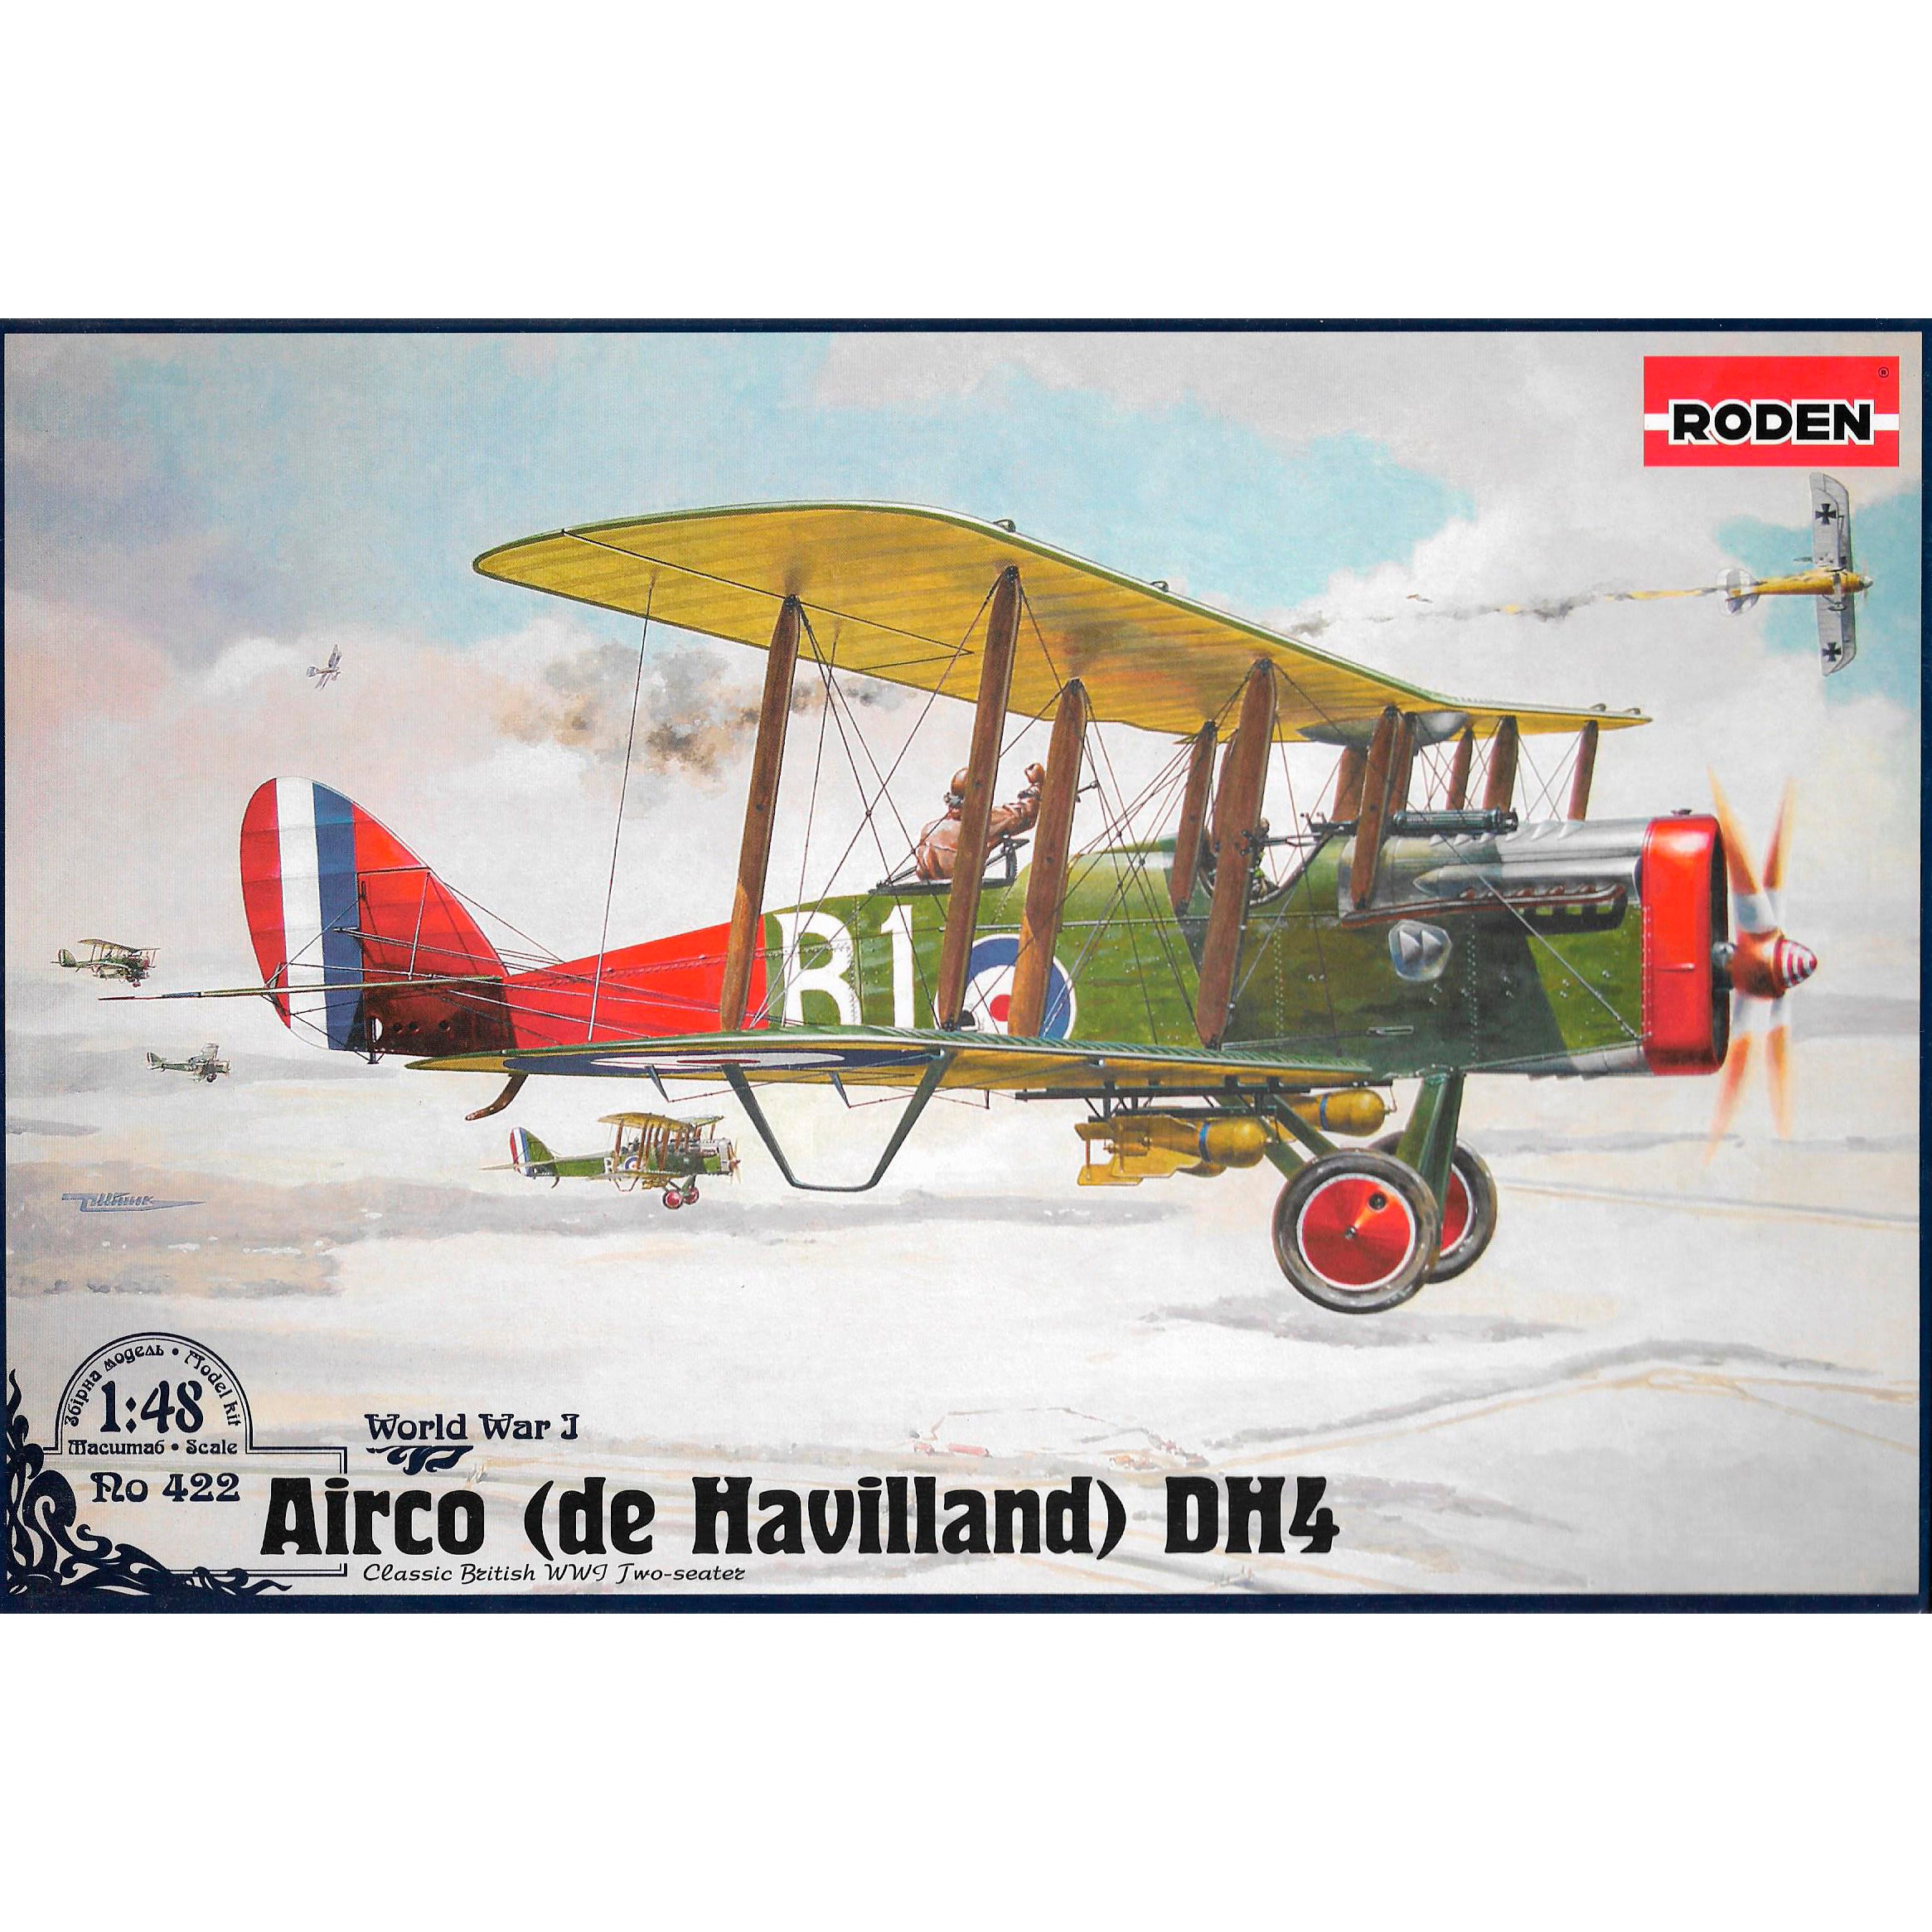 Roden 422 Airco DeHavilland D.H.4 WWI BiPlane 1/48 Scale Model Kit